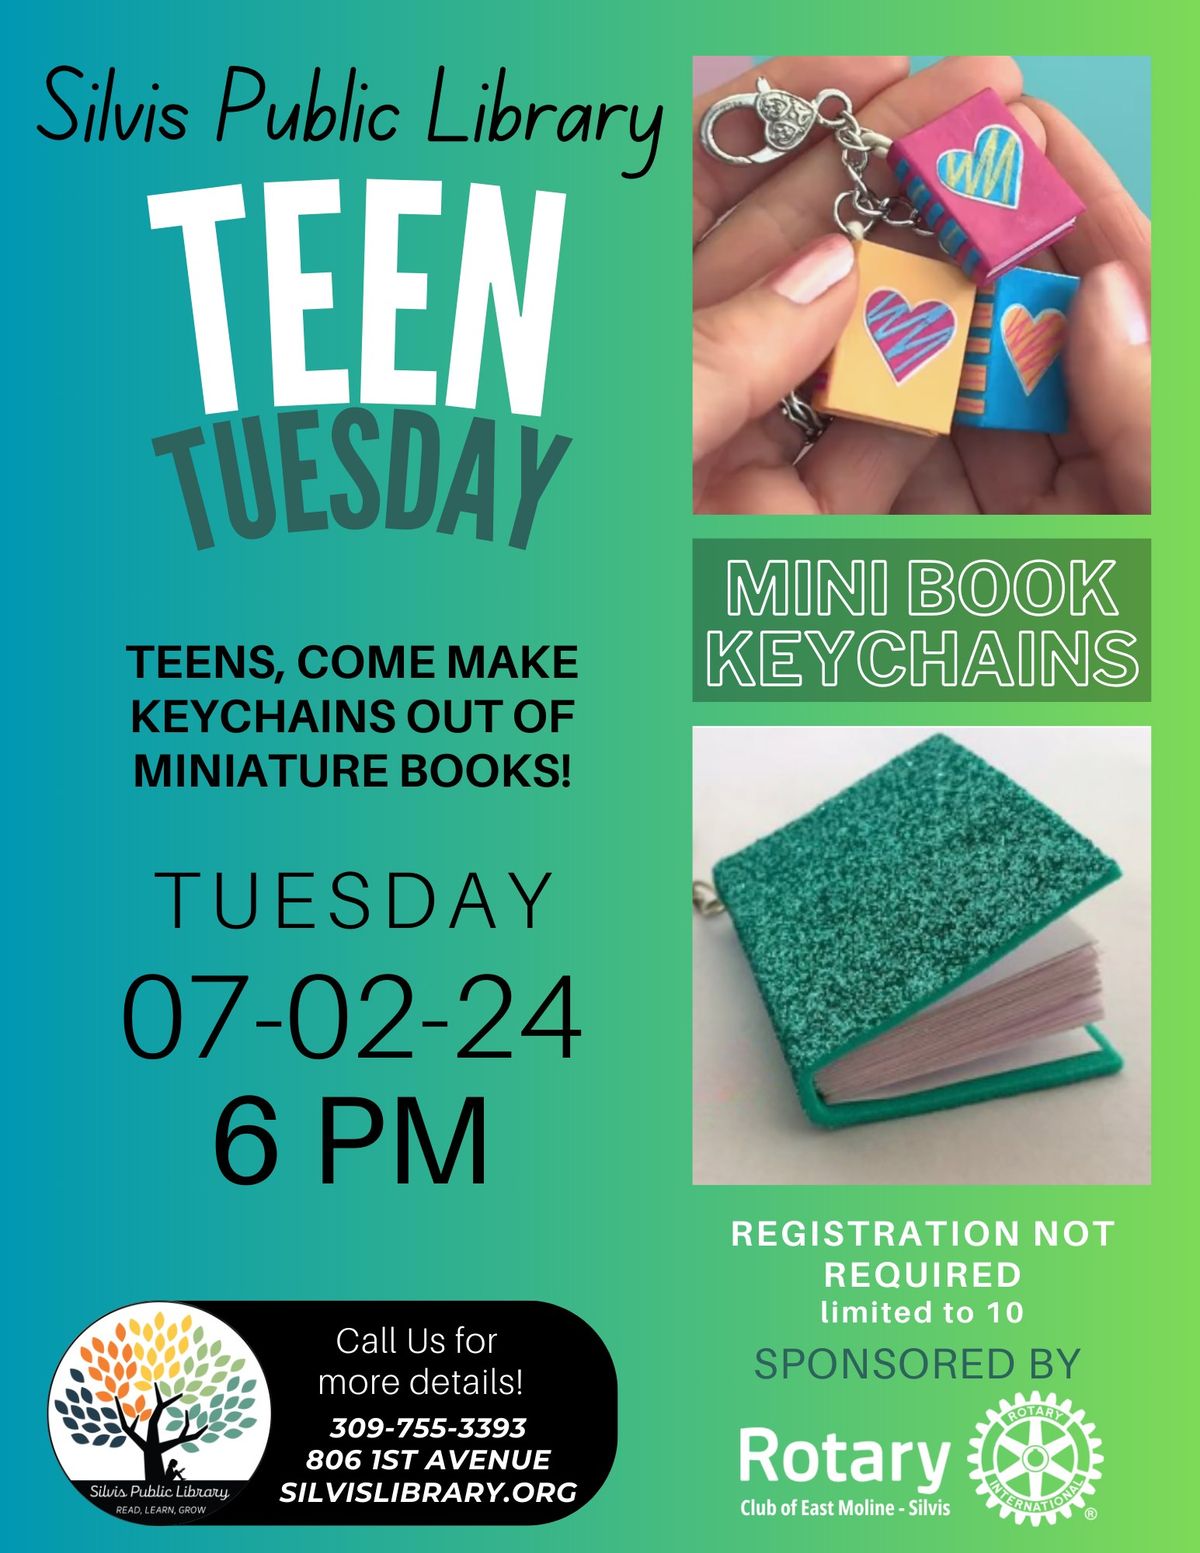 Teen Tuesday: Mini Book Keychains